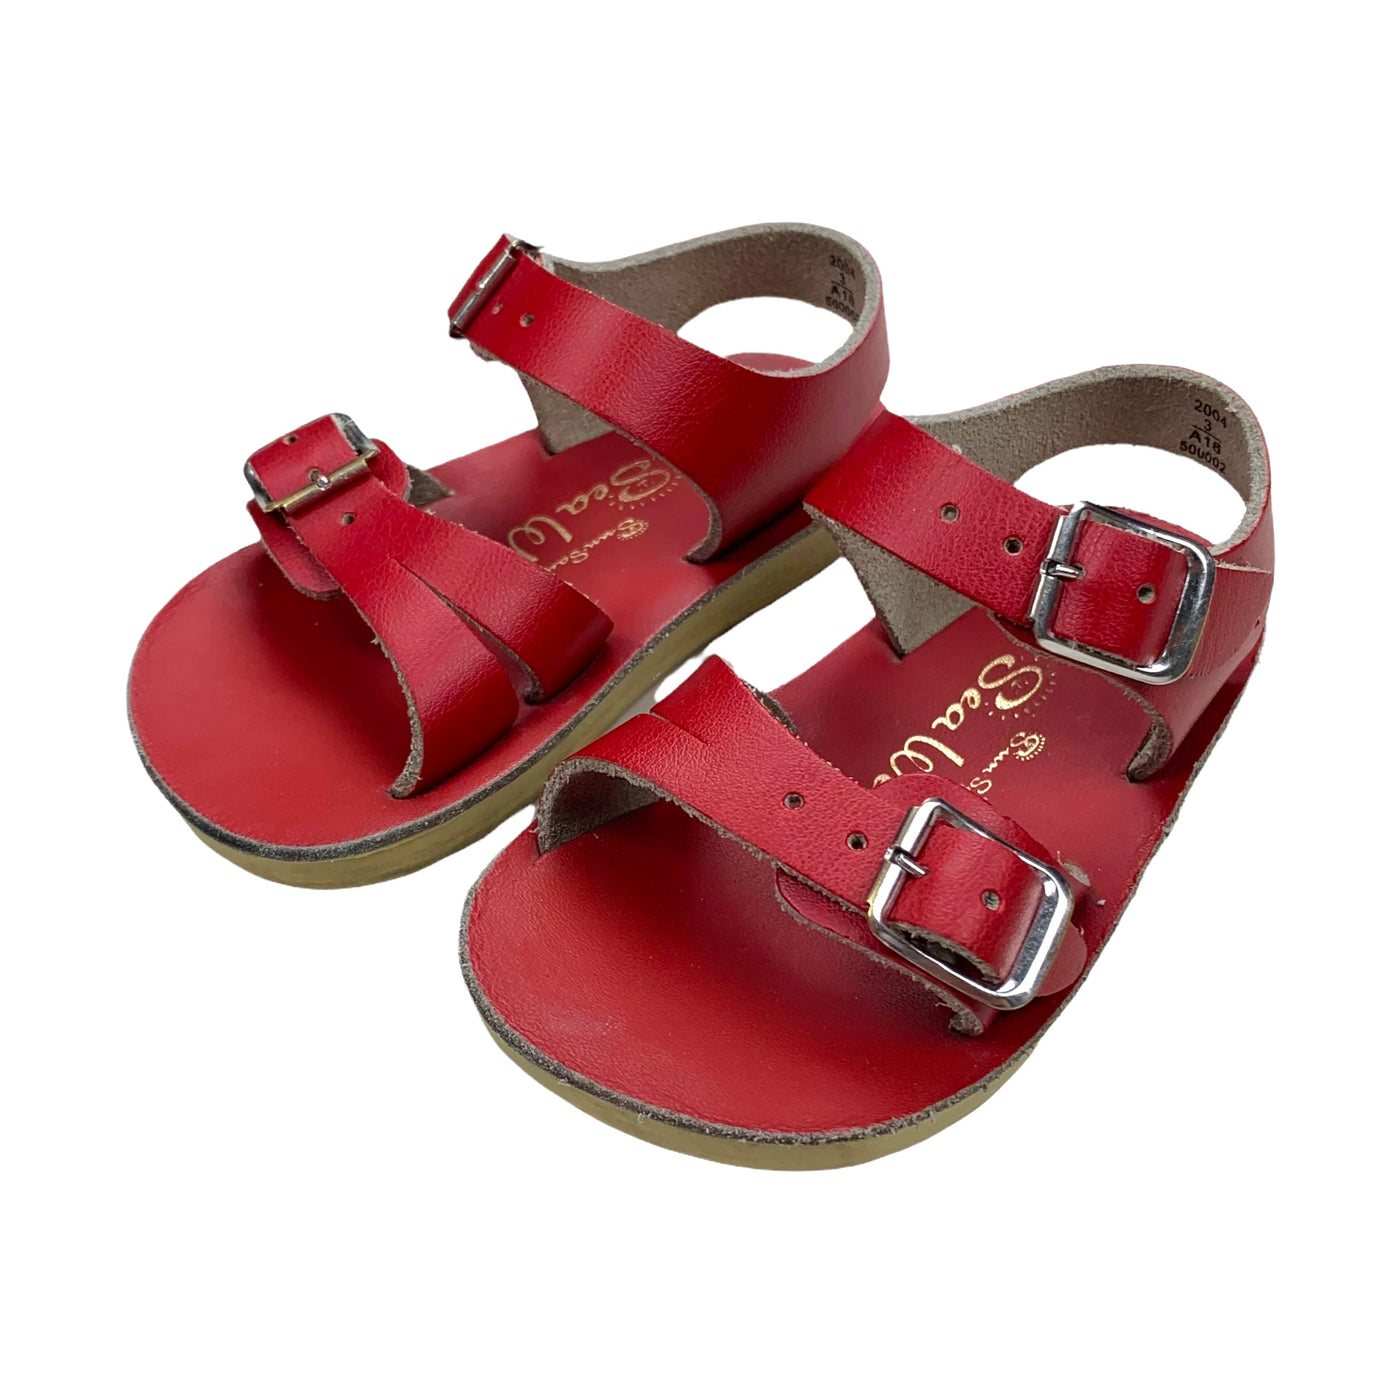 Salt water sandals red size 18